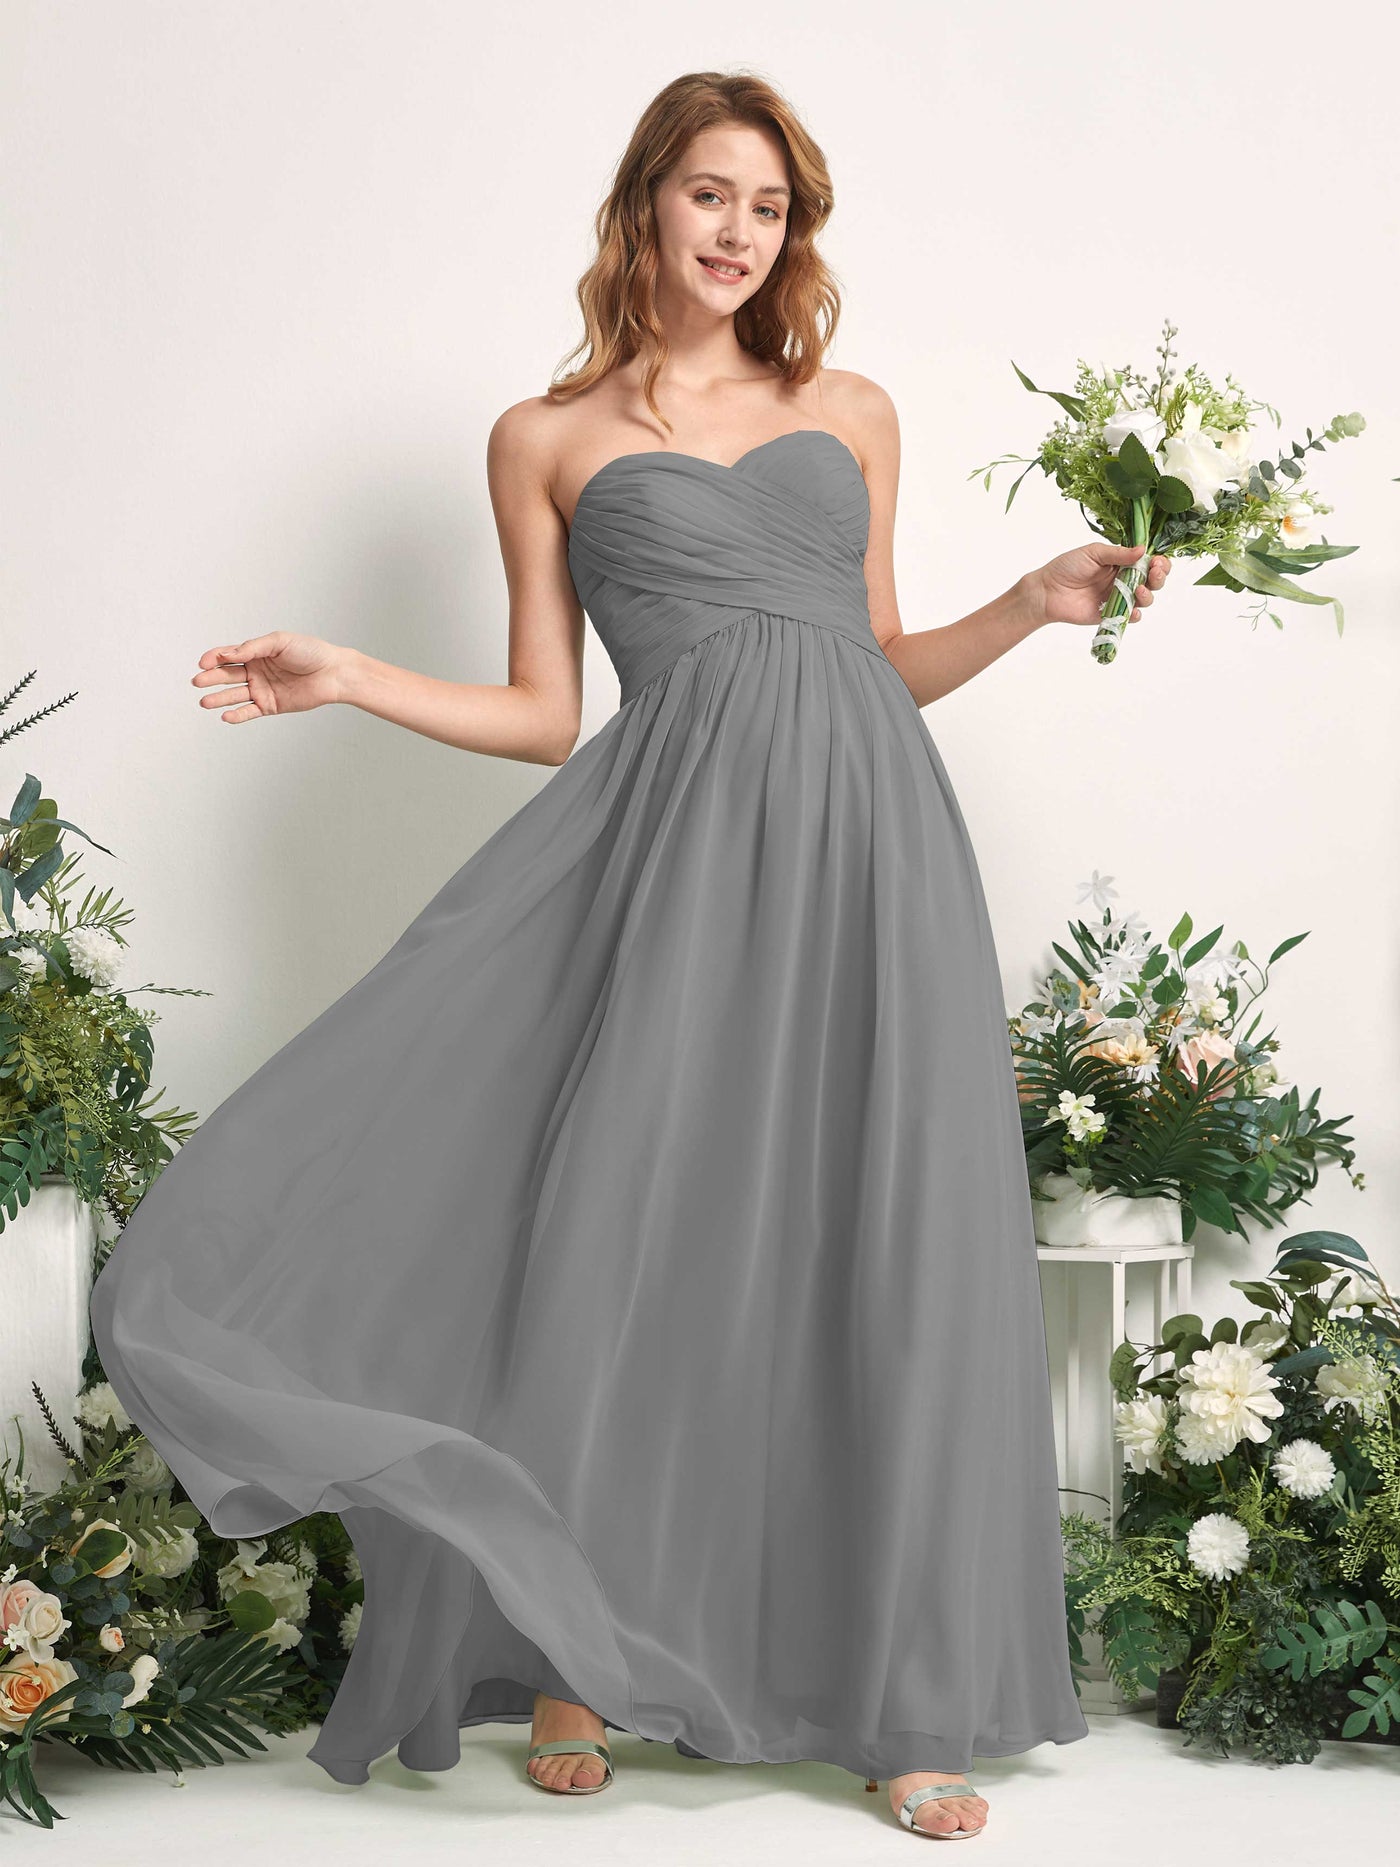 Bridesmaid Dress A-line Chiffon Sweetheart Full Length Sleeveless Wedding Party Dress - Steel Gray (81226920)#color_steel-gray